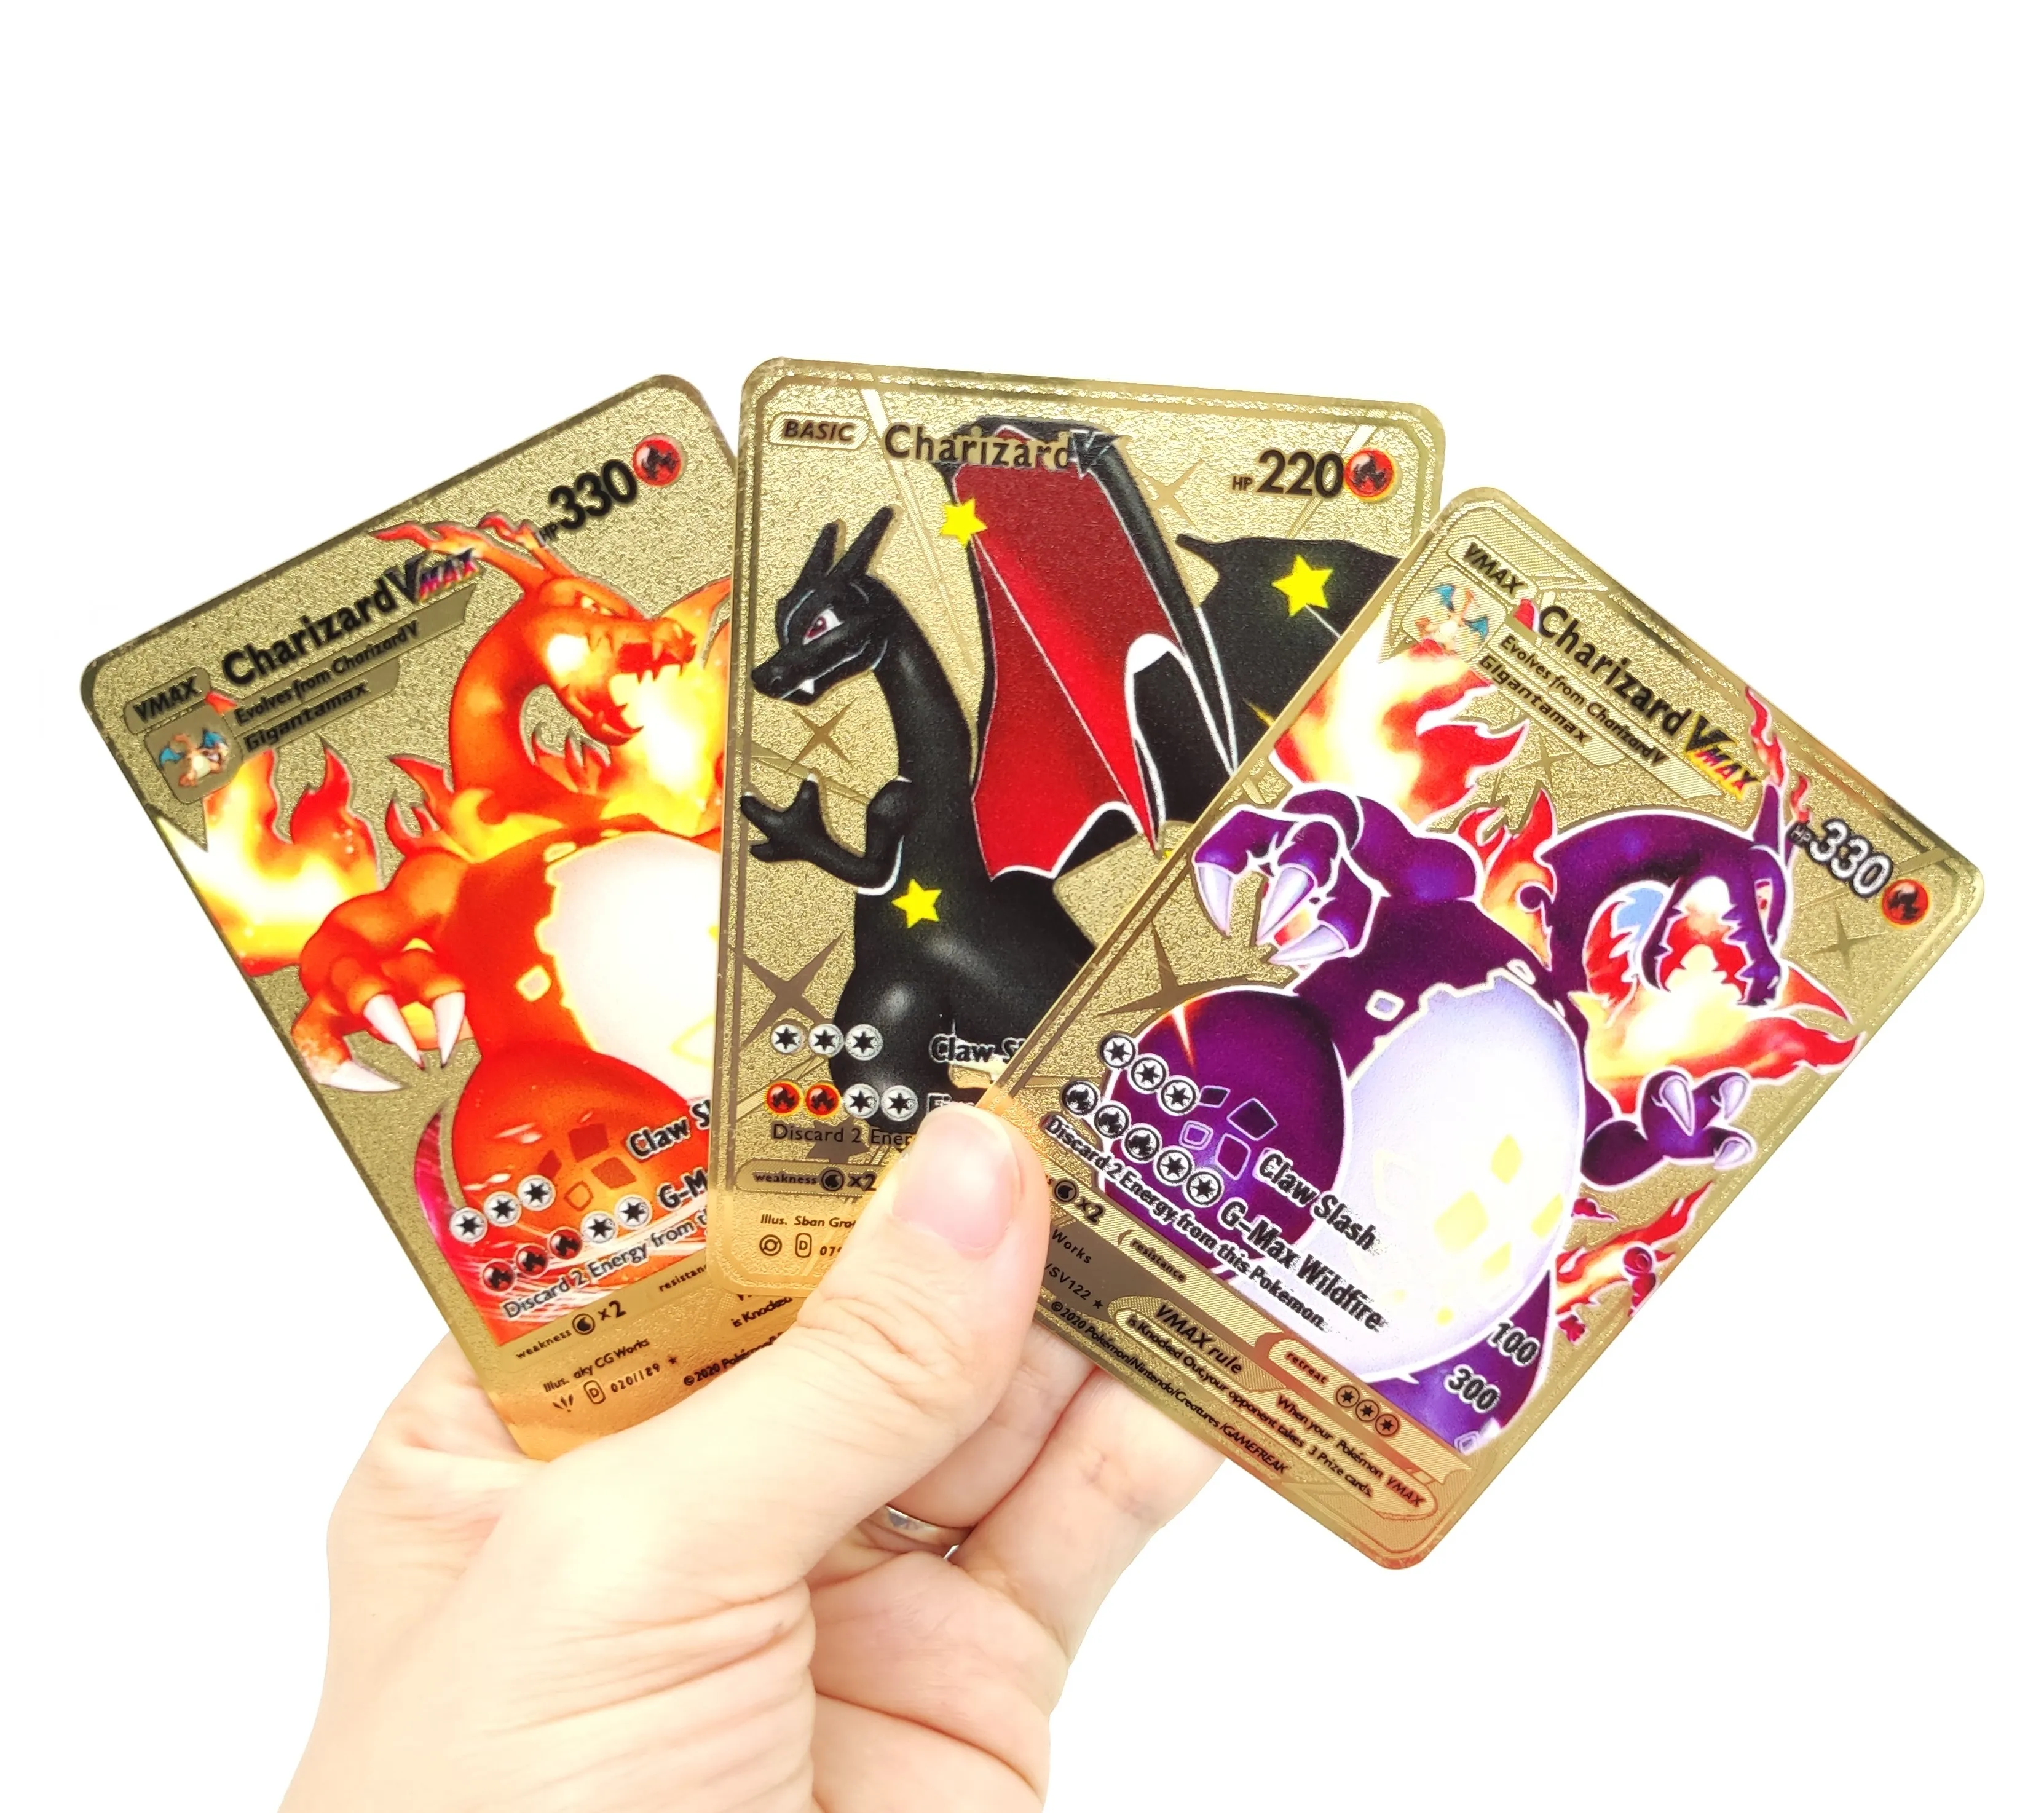 

Rts Charizard Vmax Blastoise Venusaur Gold Metal Pokemon Cards 1st Edition New Trading Cards Game